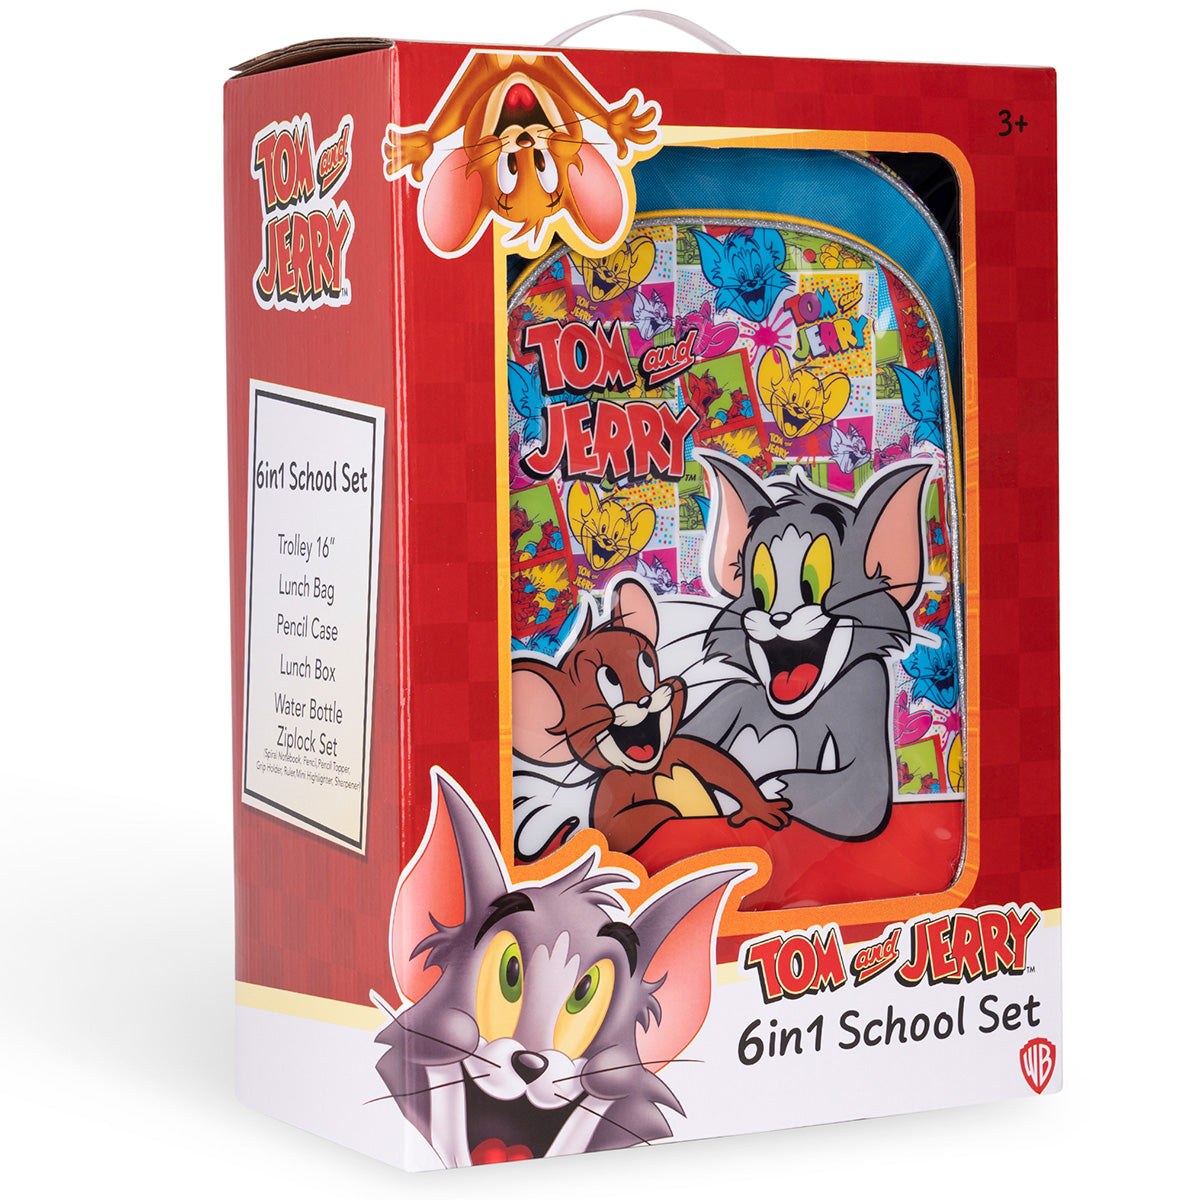 Warner Bros' Tom and Jerry Pop Art 6in1 Box Set 16"